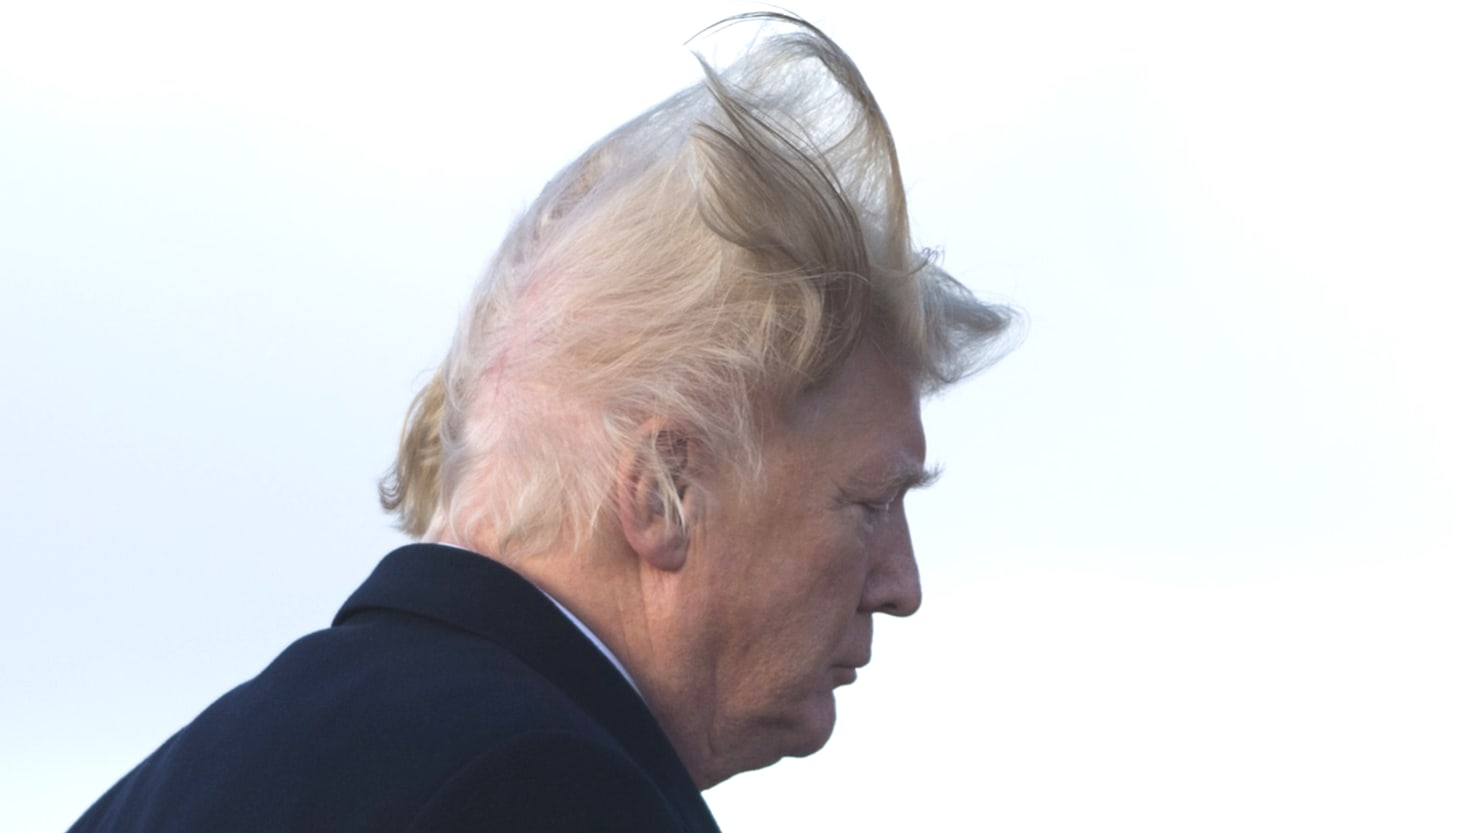 Another Photo of Trump 180208-stern-trump-hair-tease_hiy8tu